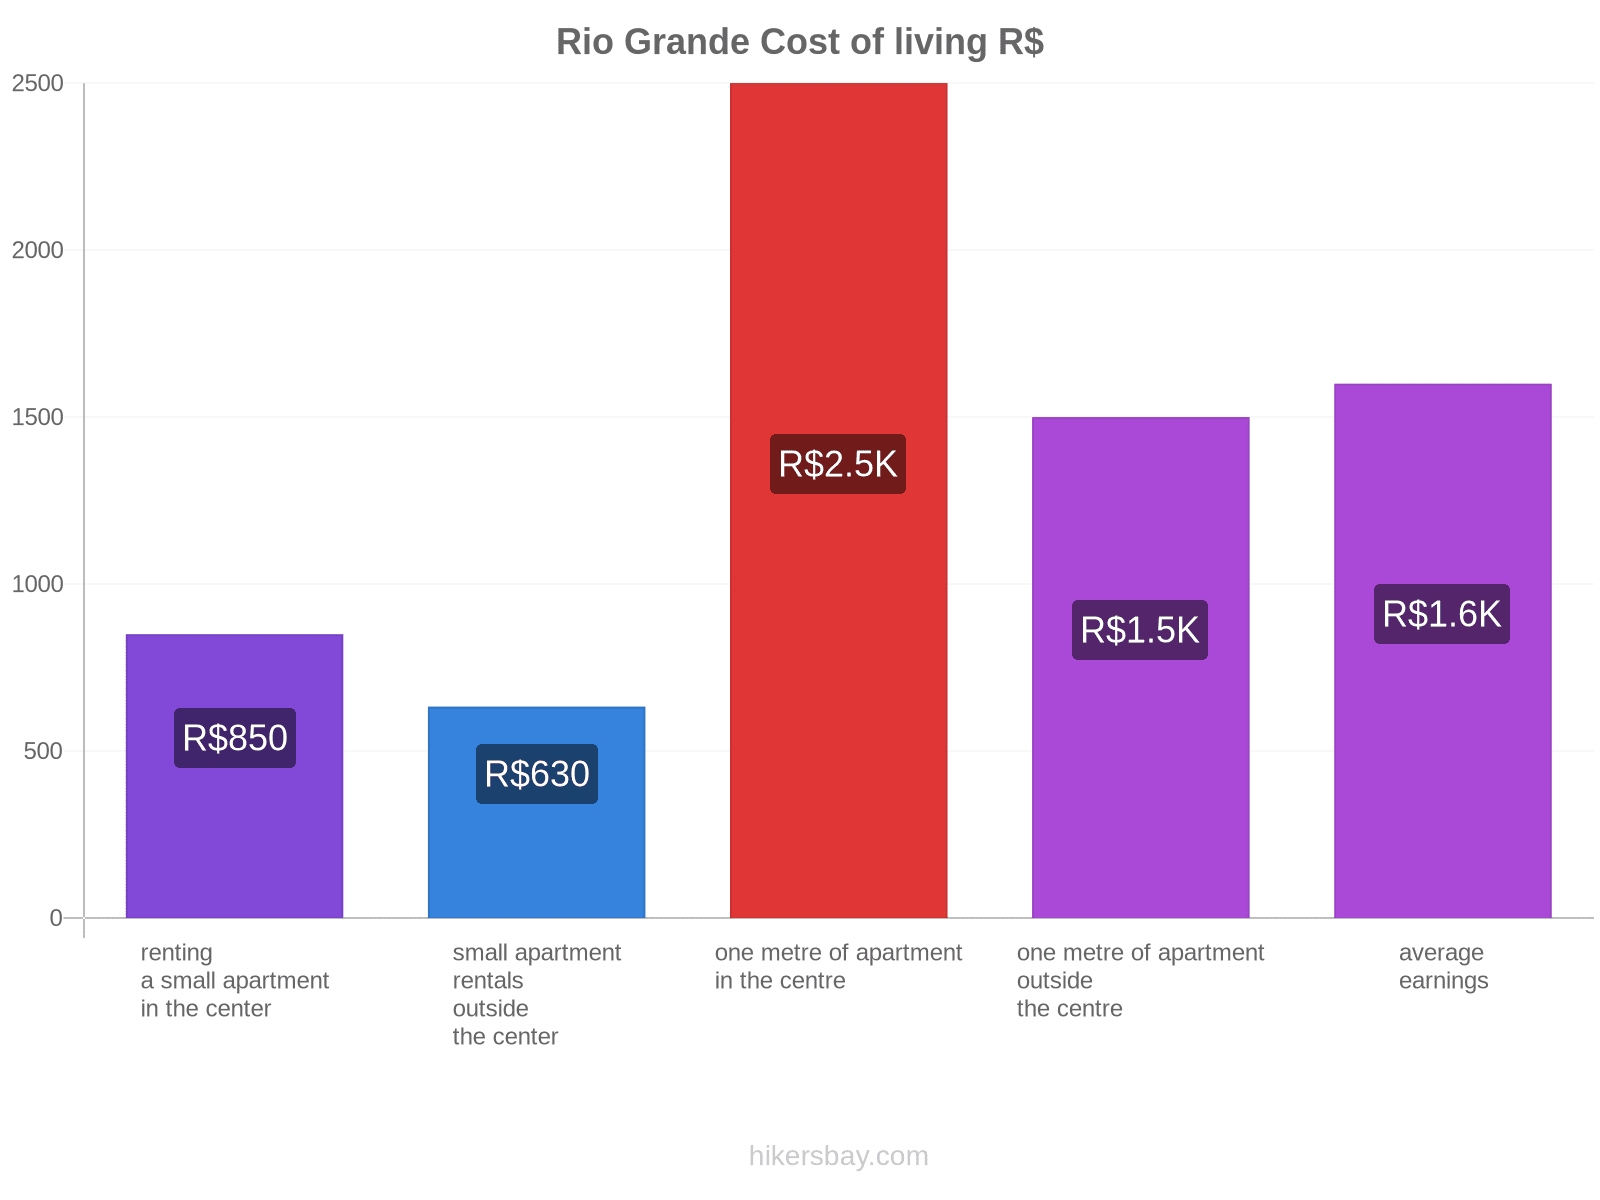 Rio Grande cost of living hikersbay.com